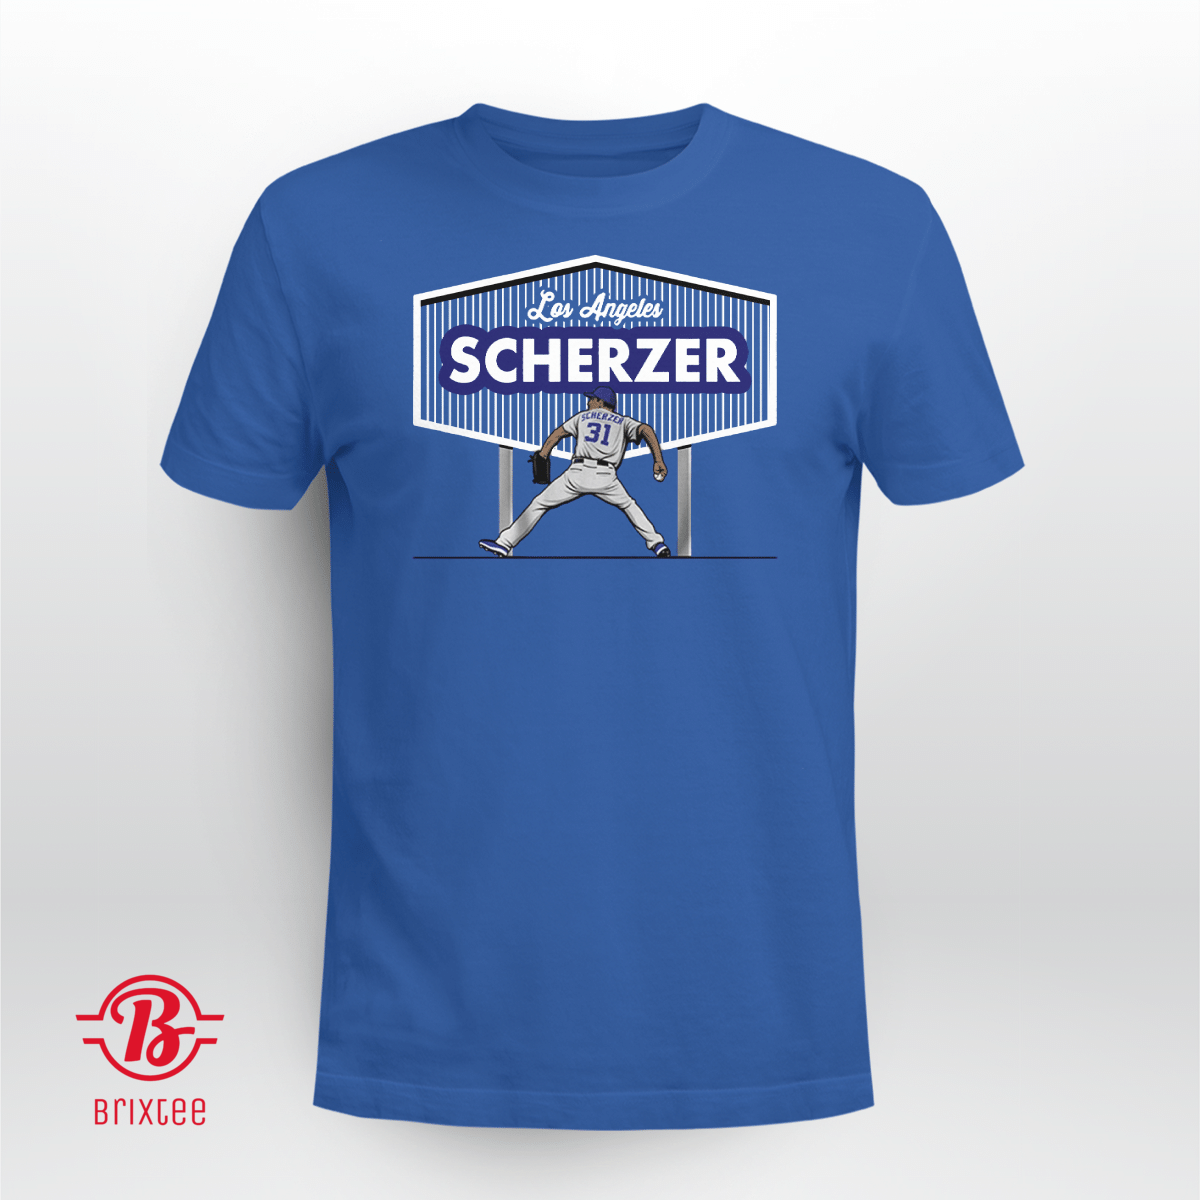 L.A. Max Scherzer - Los Angeles Dodgers - MLBPA Licensed